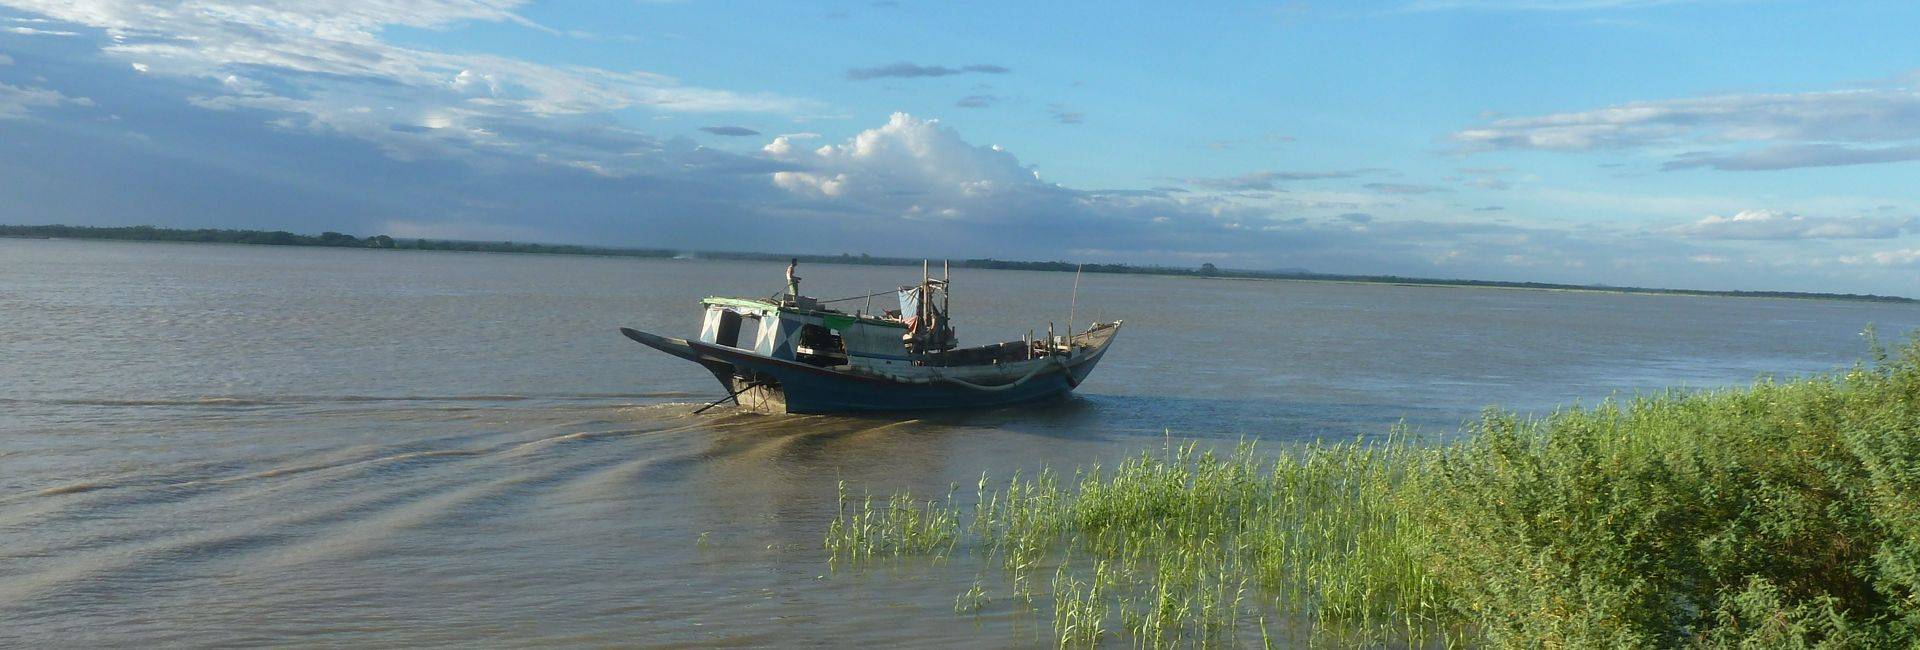 Boat on Irrawaddy